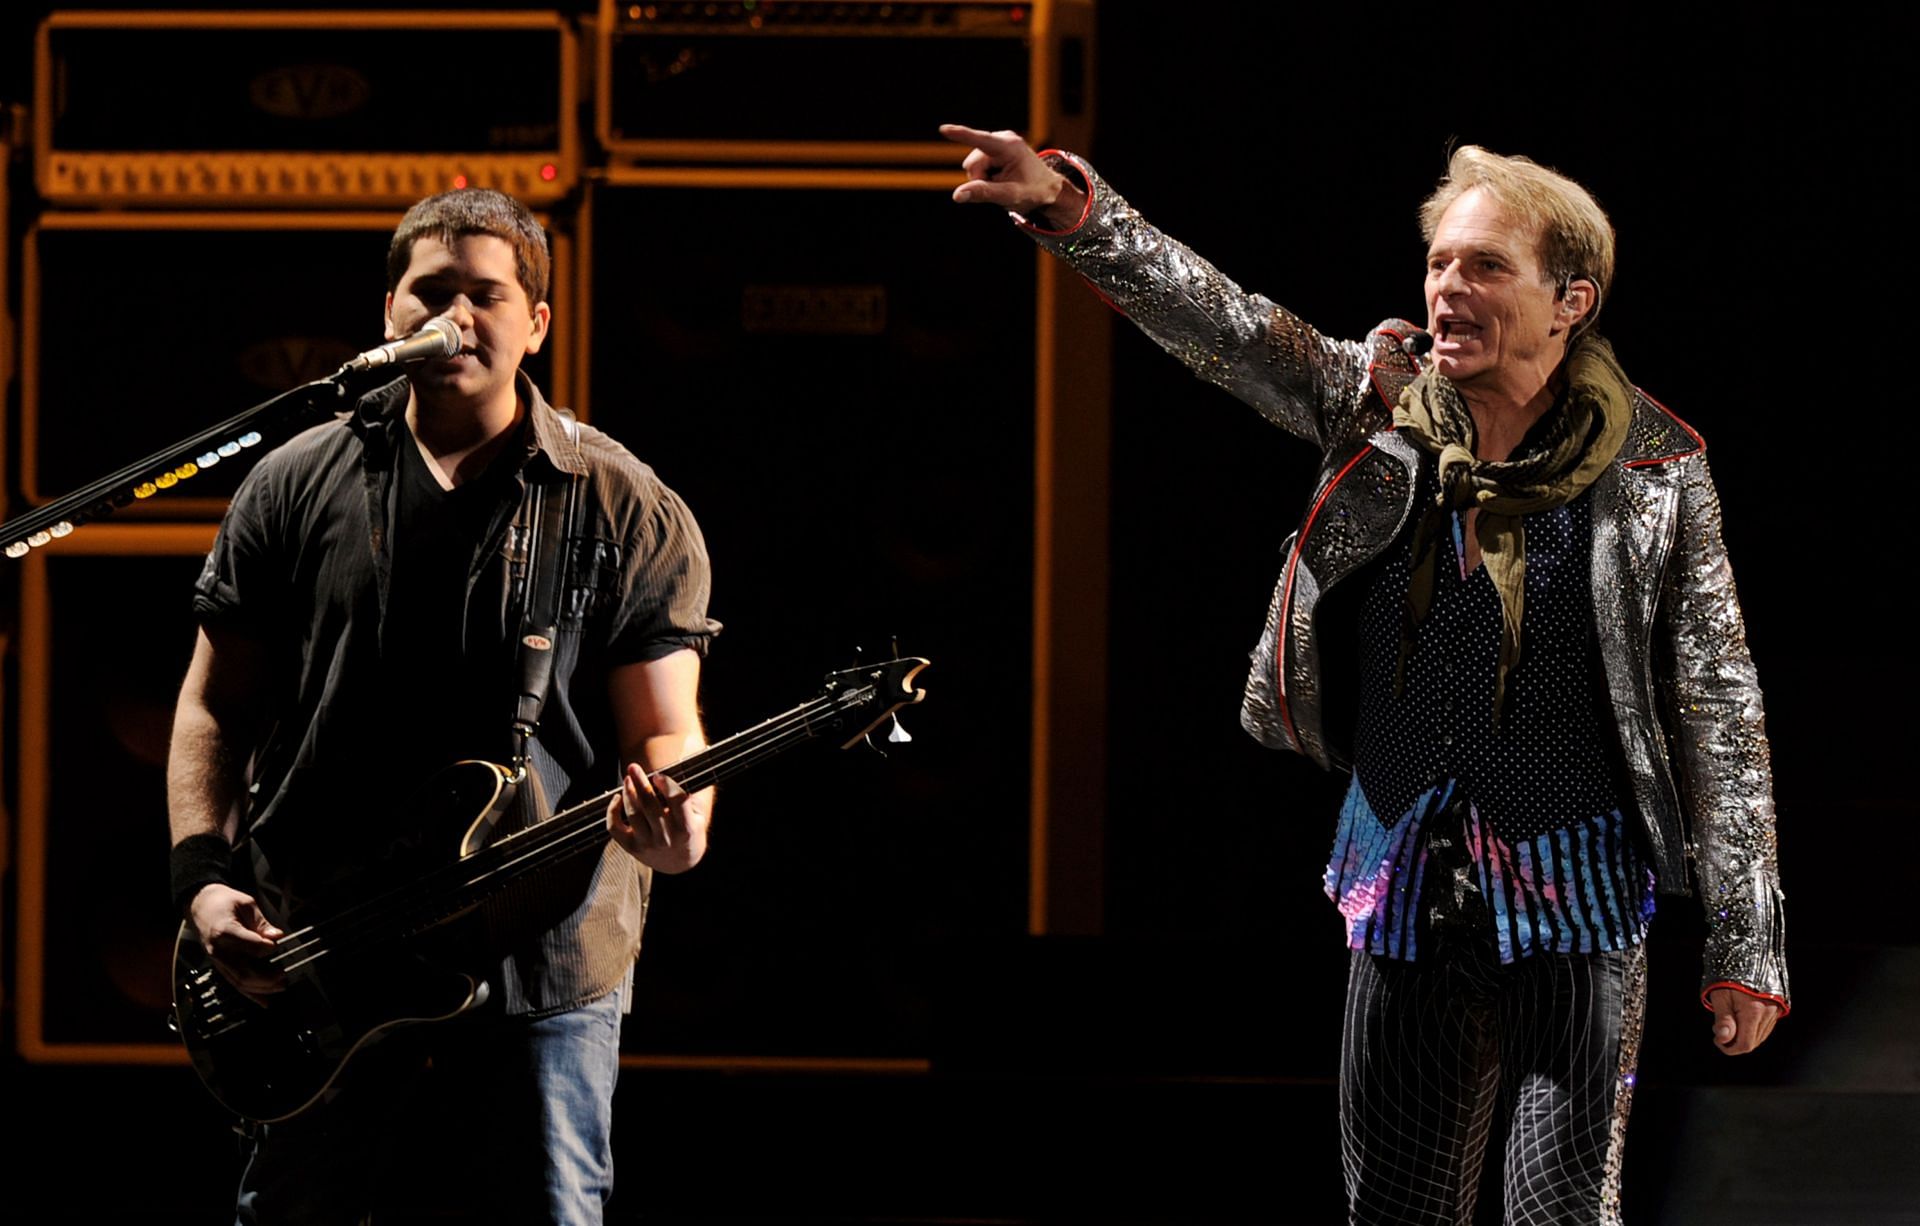 Wolfgang Van Halen (L) and David Lee Roth (R) at a rehearsal (image via Getty)